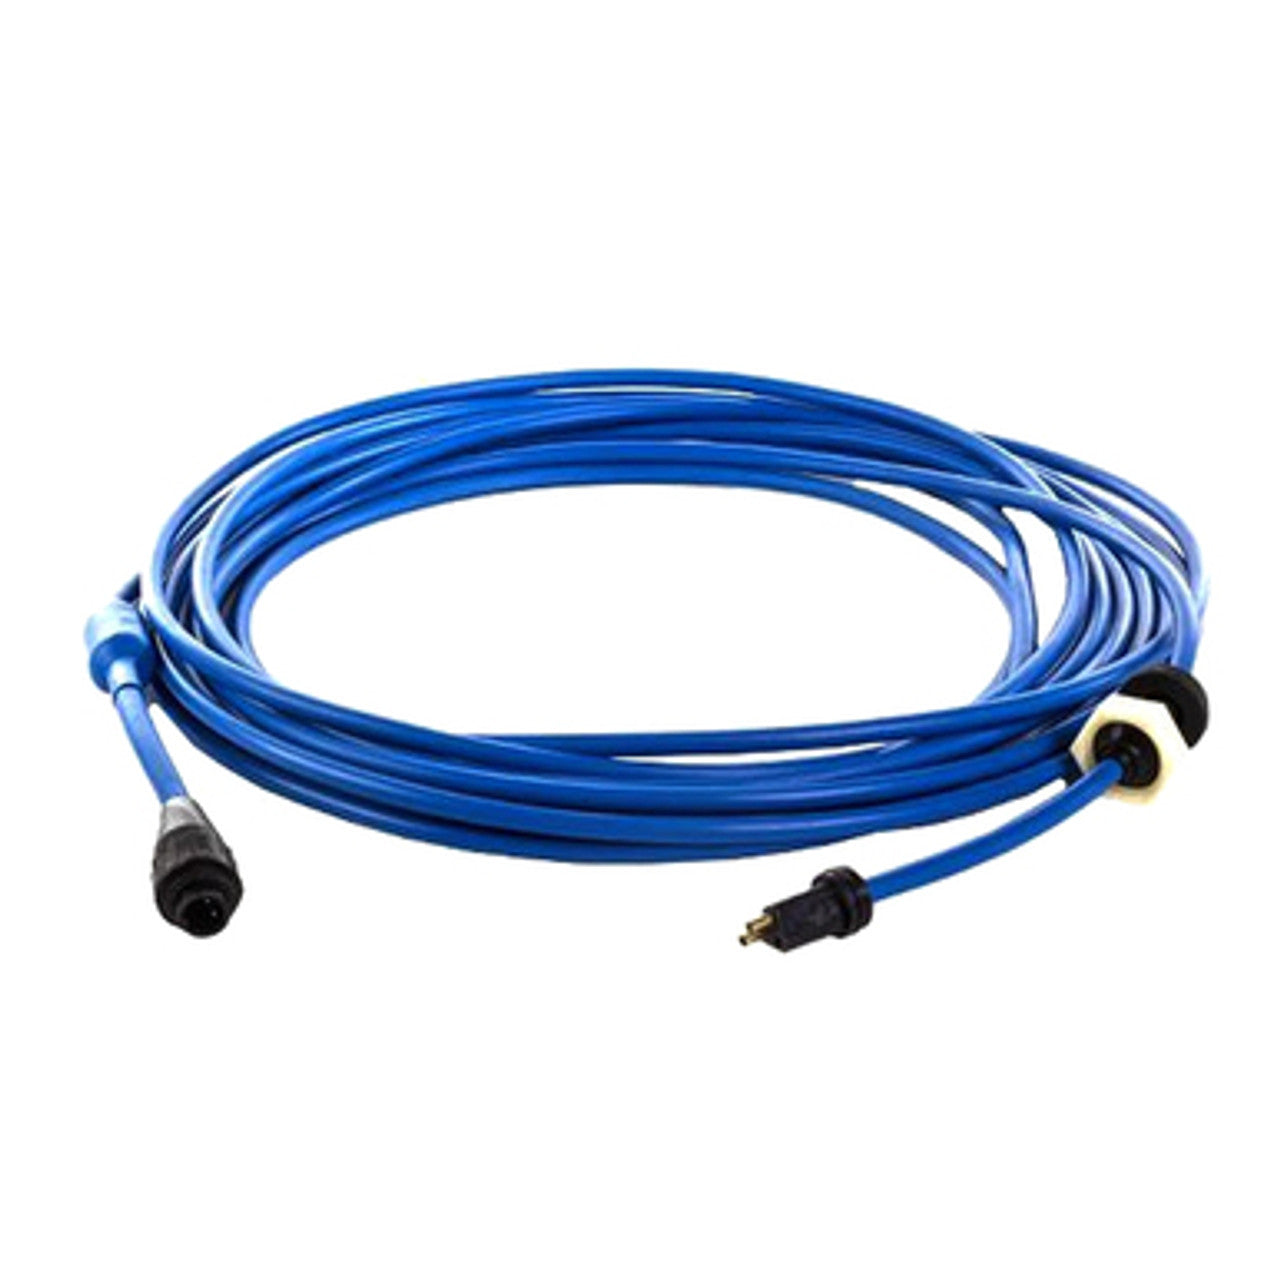 Maytronics 99958902-DIY Cable (No Swivel, 2 Wire) - 40 Feet